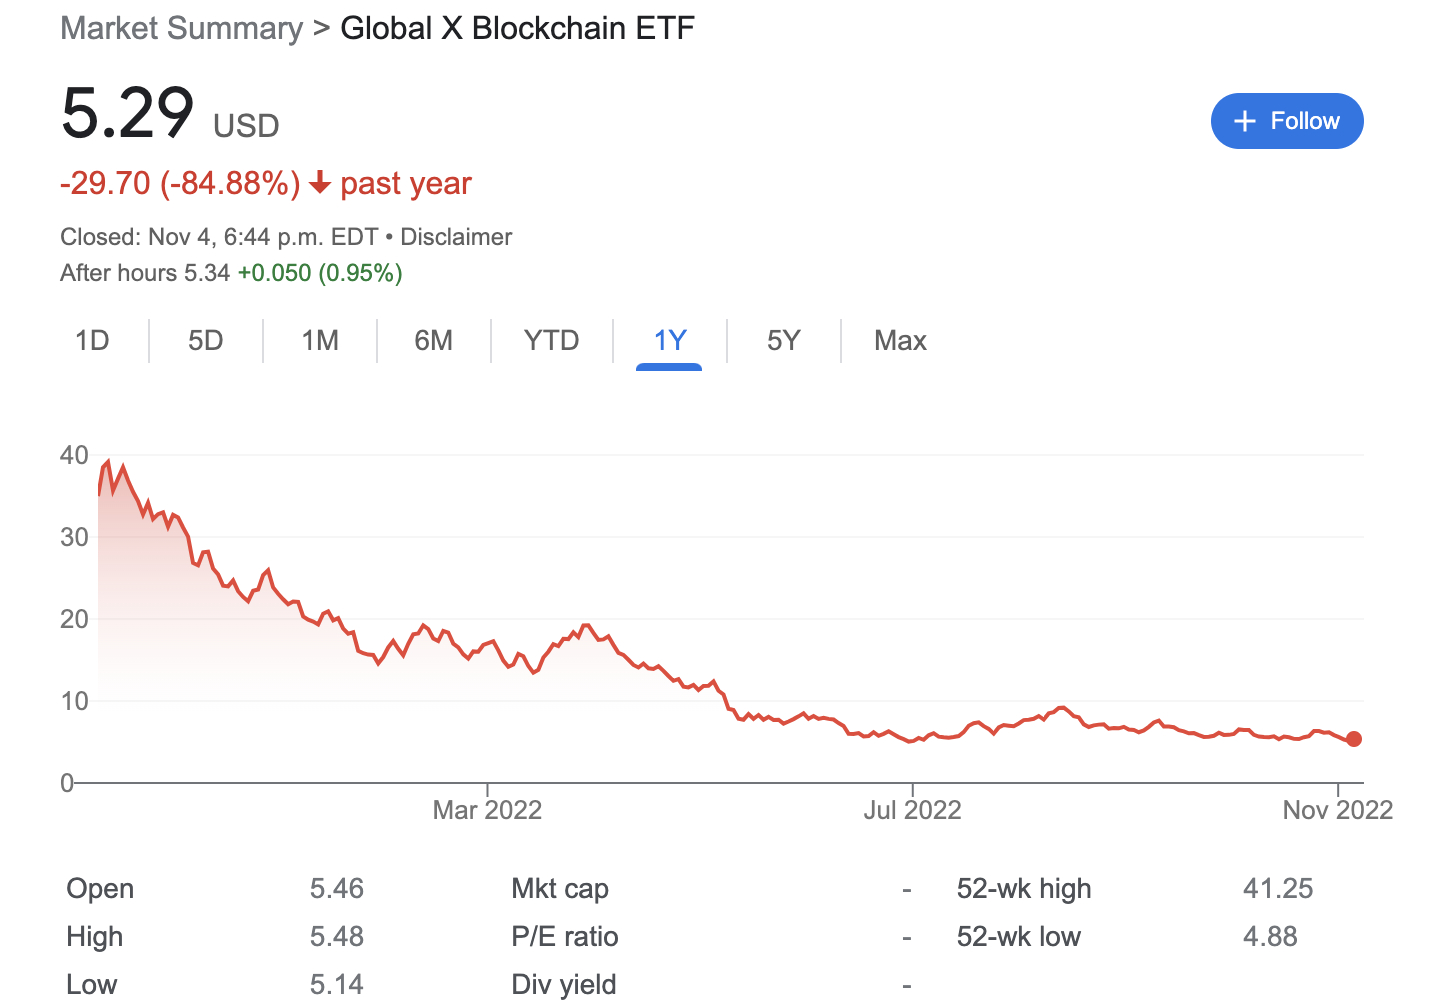 Global X Blockchain ETF price chart